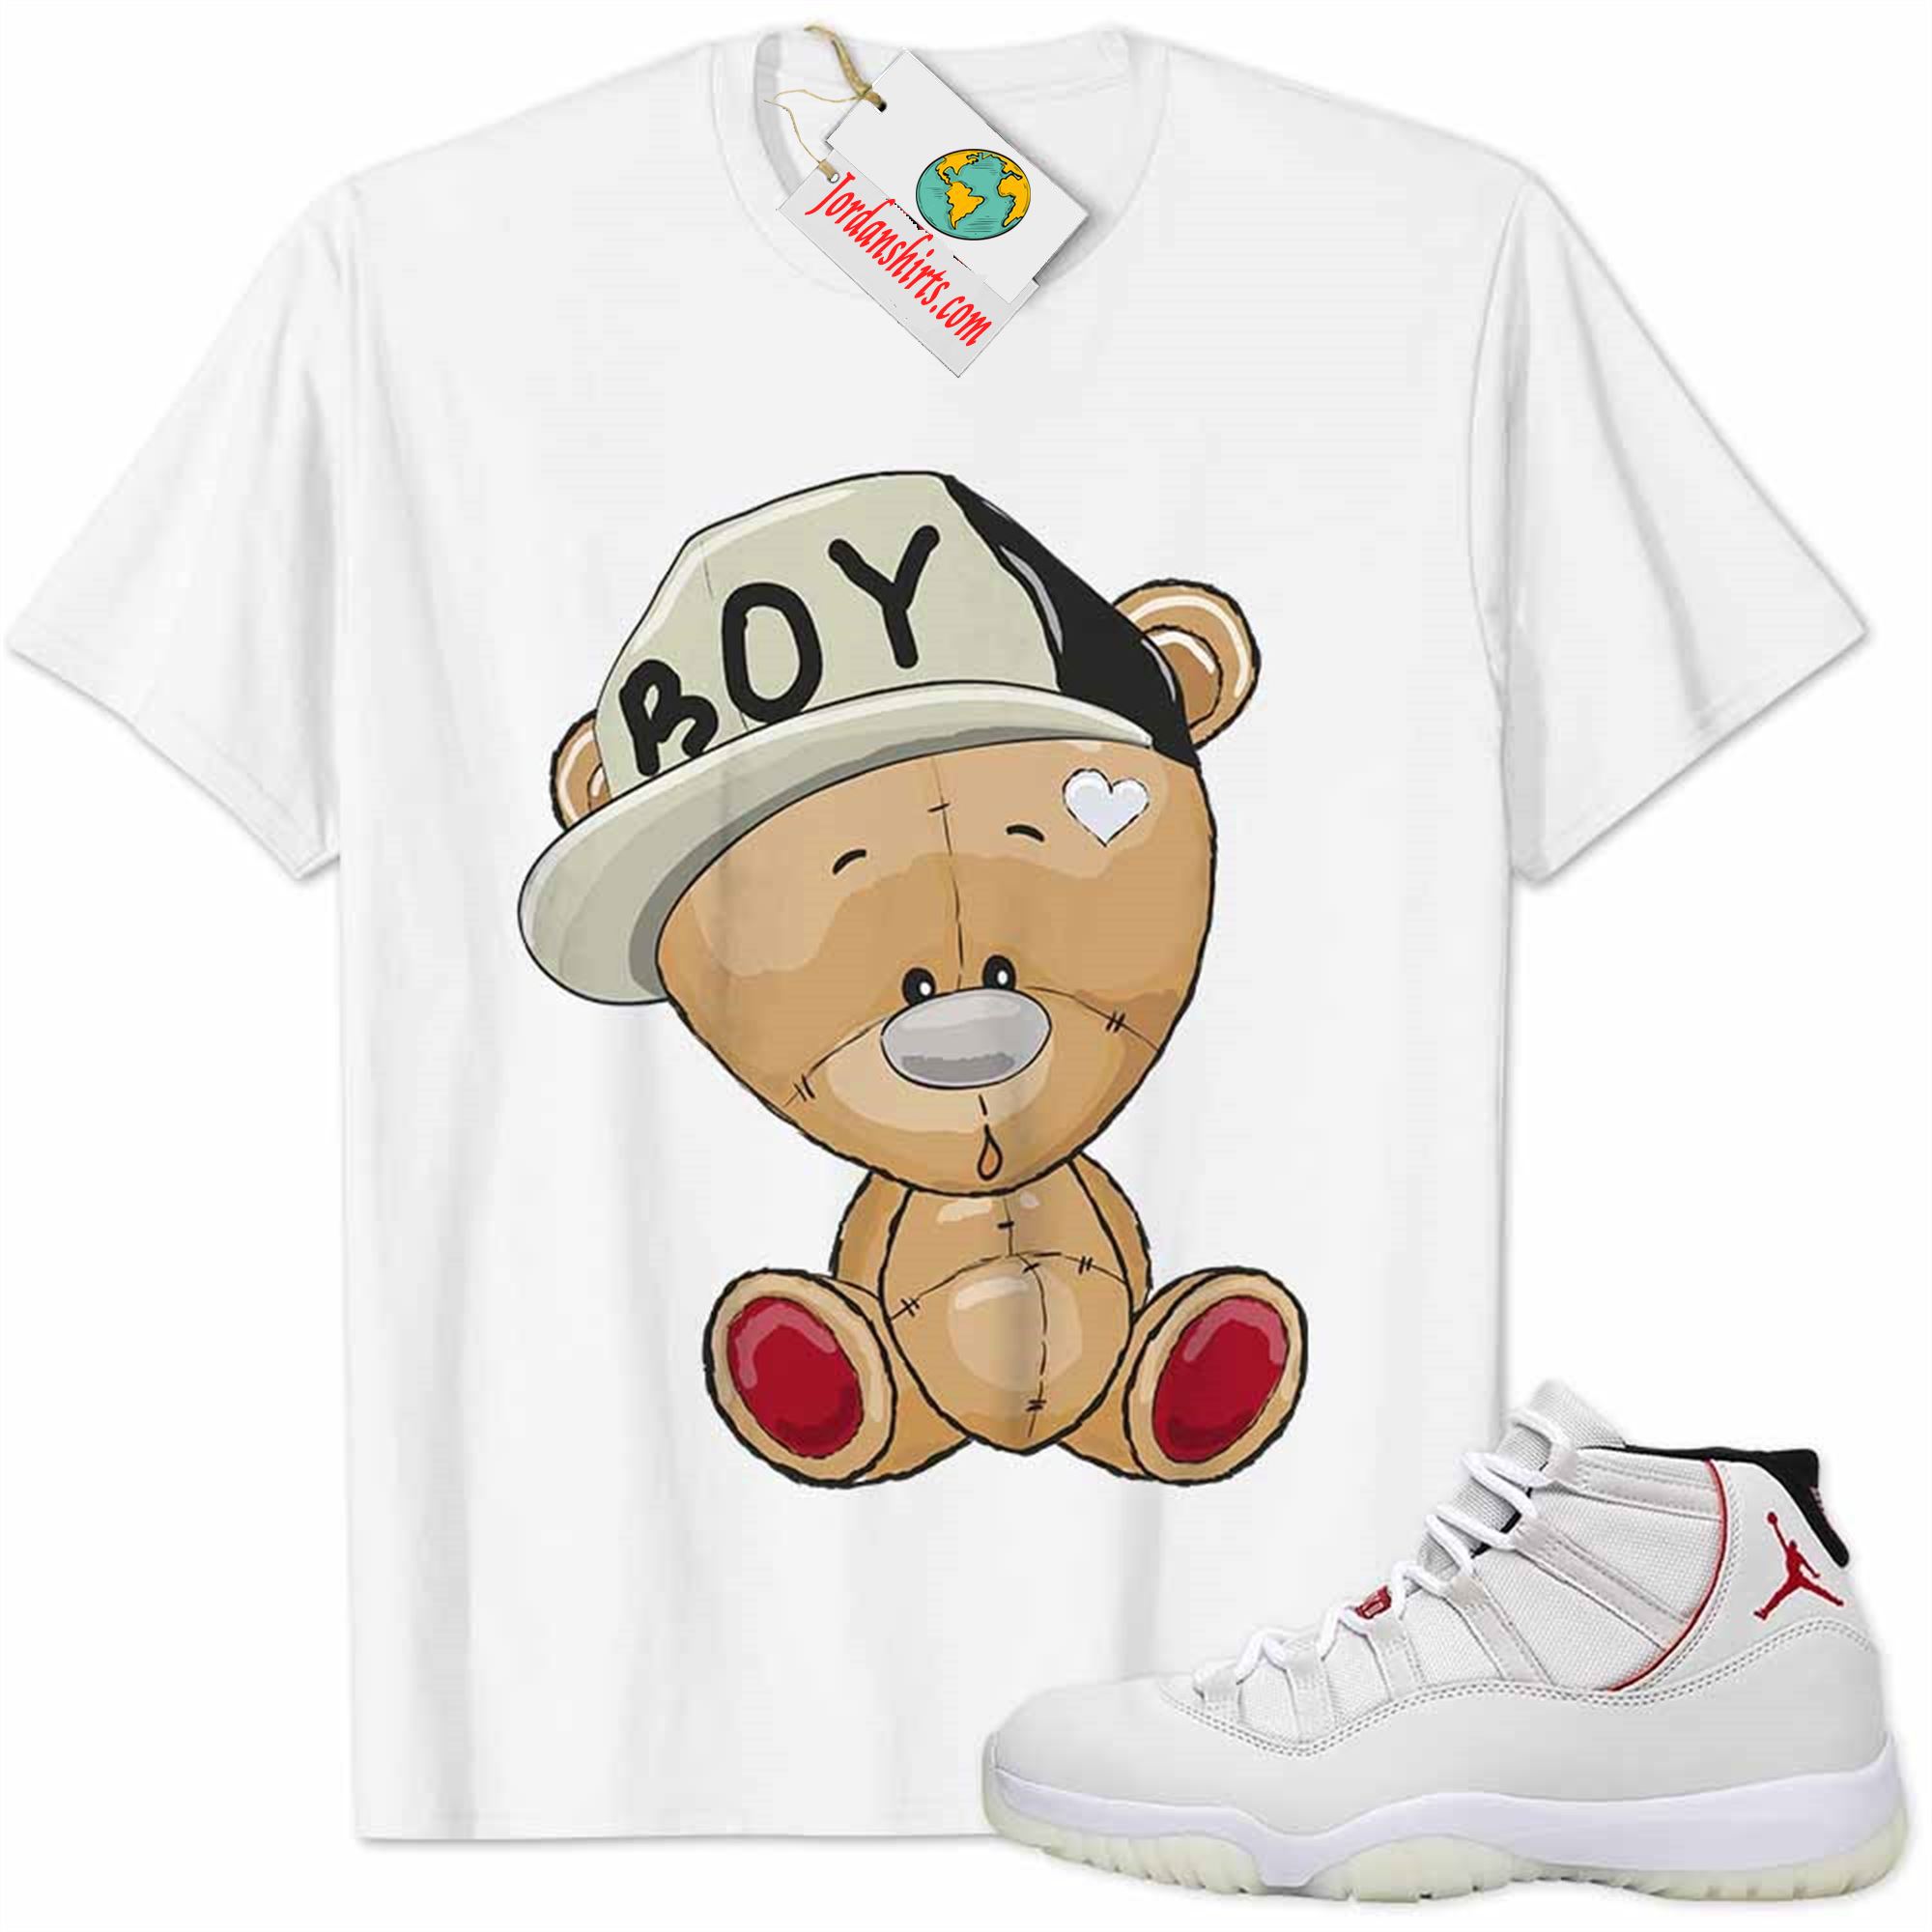 Jordan 11 Shirt, Jordan 11 Platinum Tint Shirt Cute Baby Teddy Bear White Size Up To 5xl